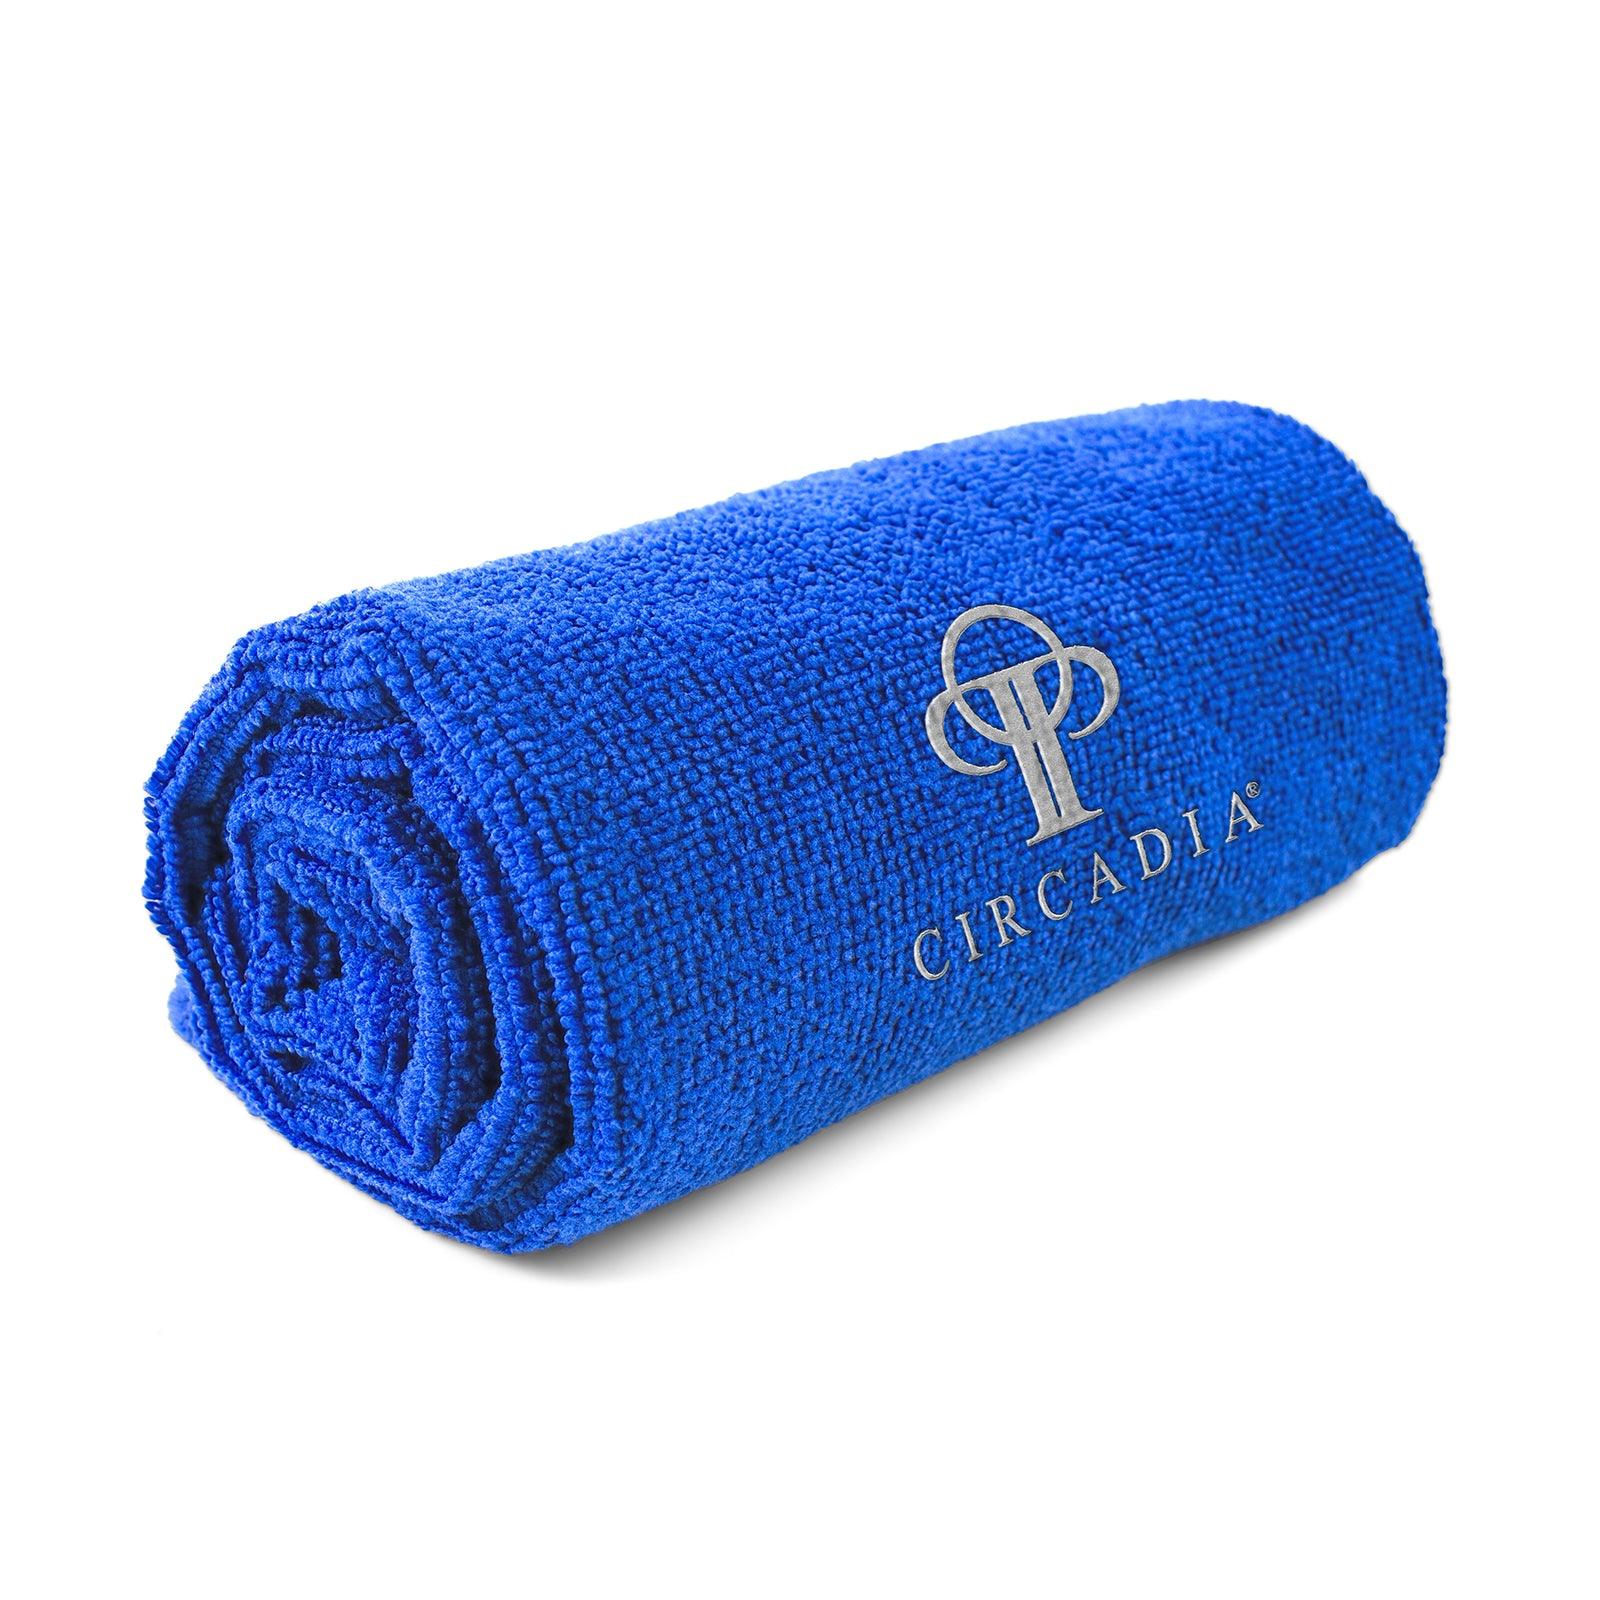 Blue Microfiber Towel - CIRCADIA